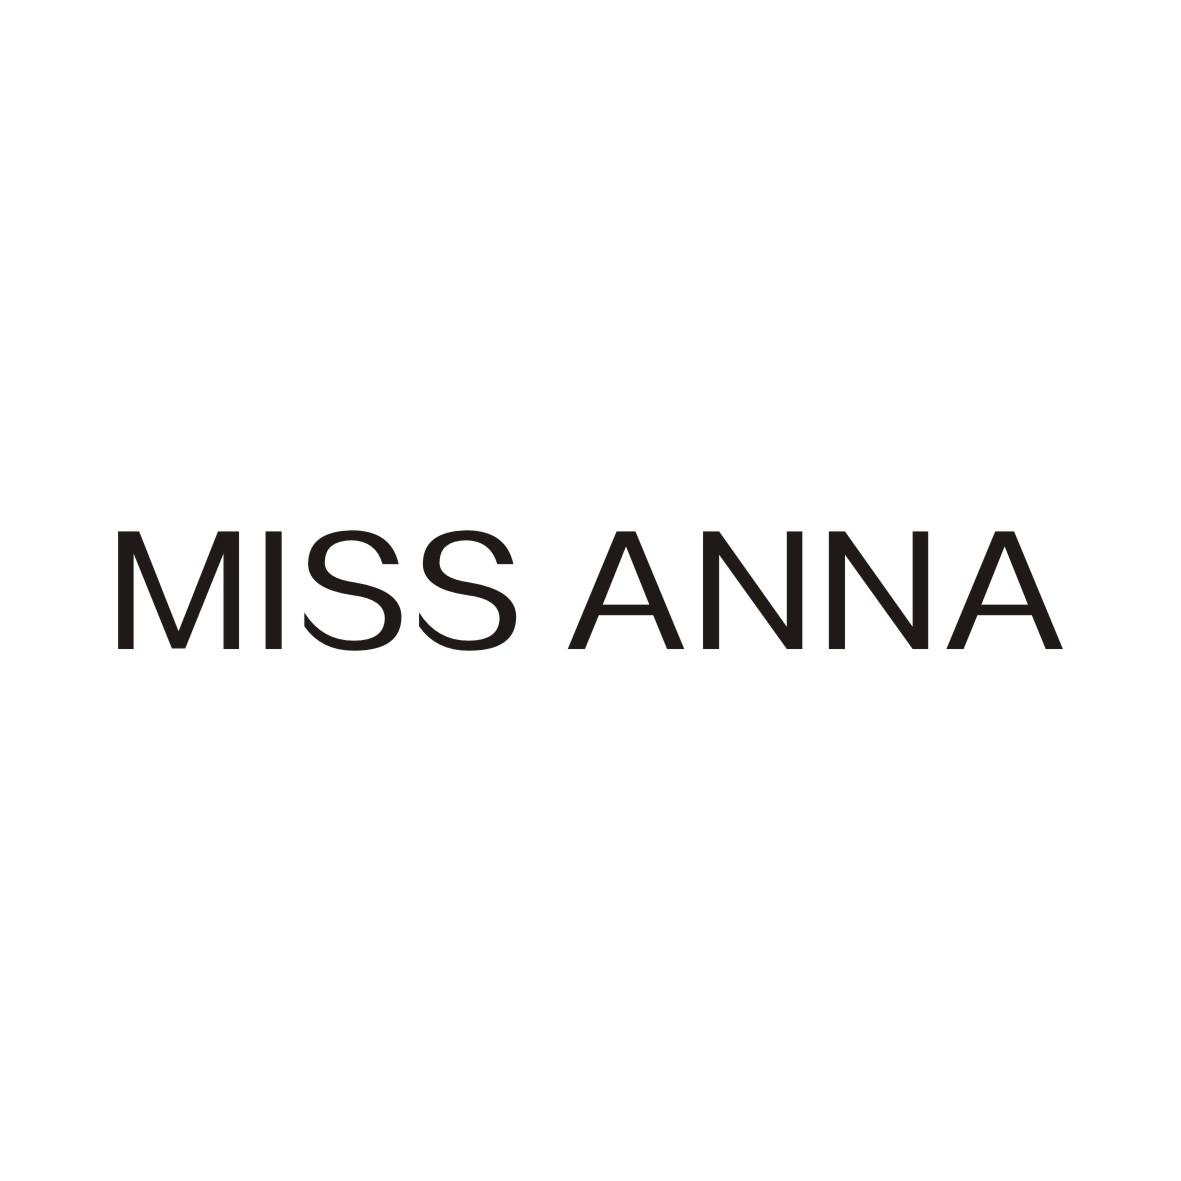 MISS ANNA商标转让